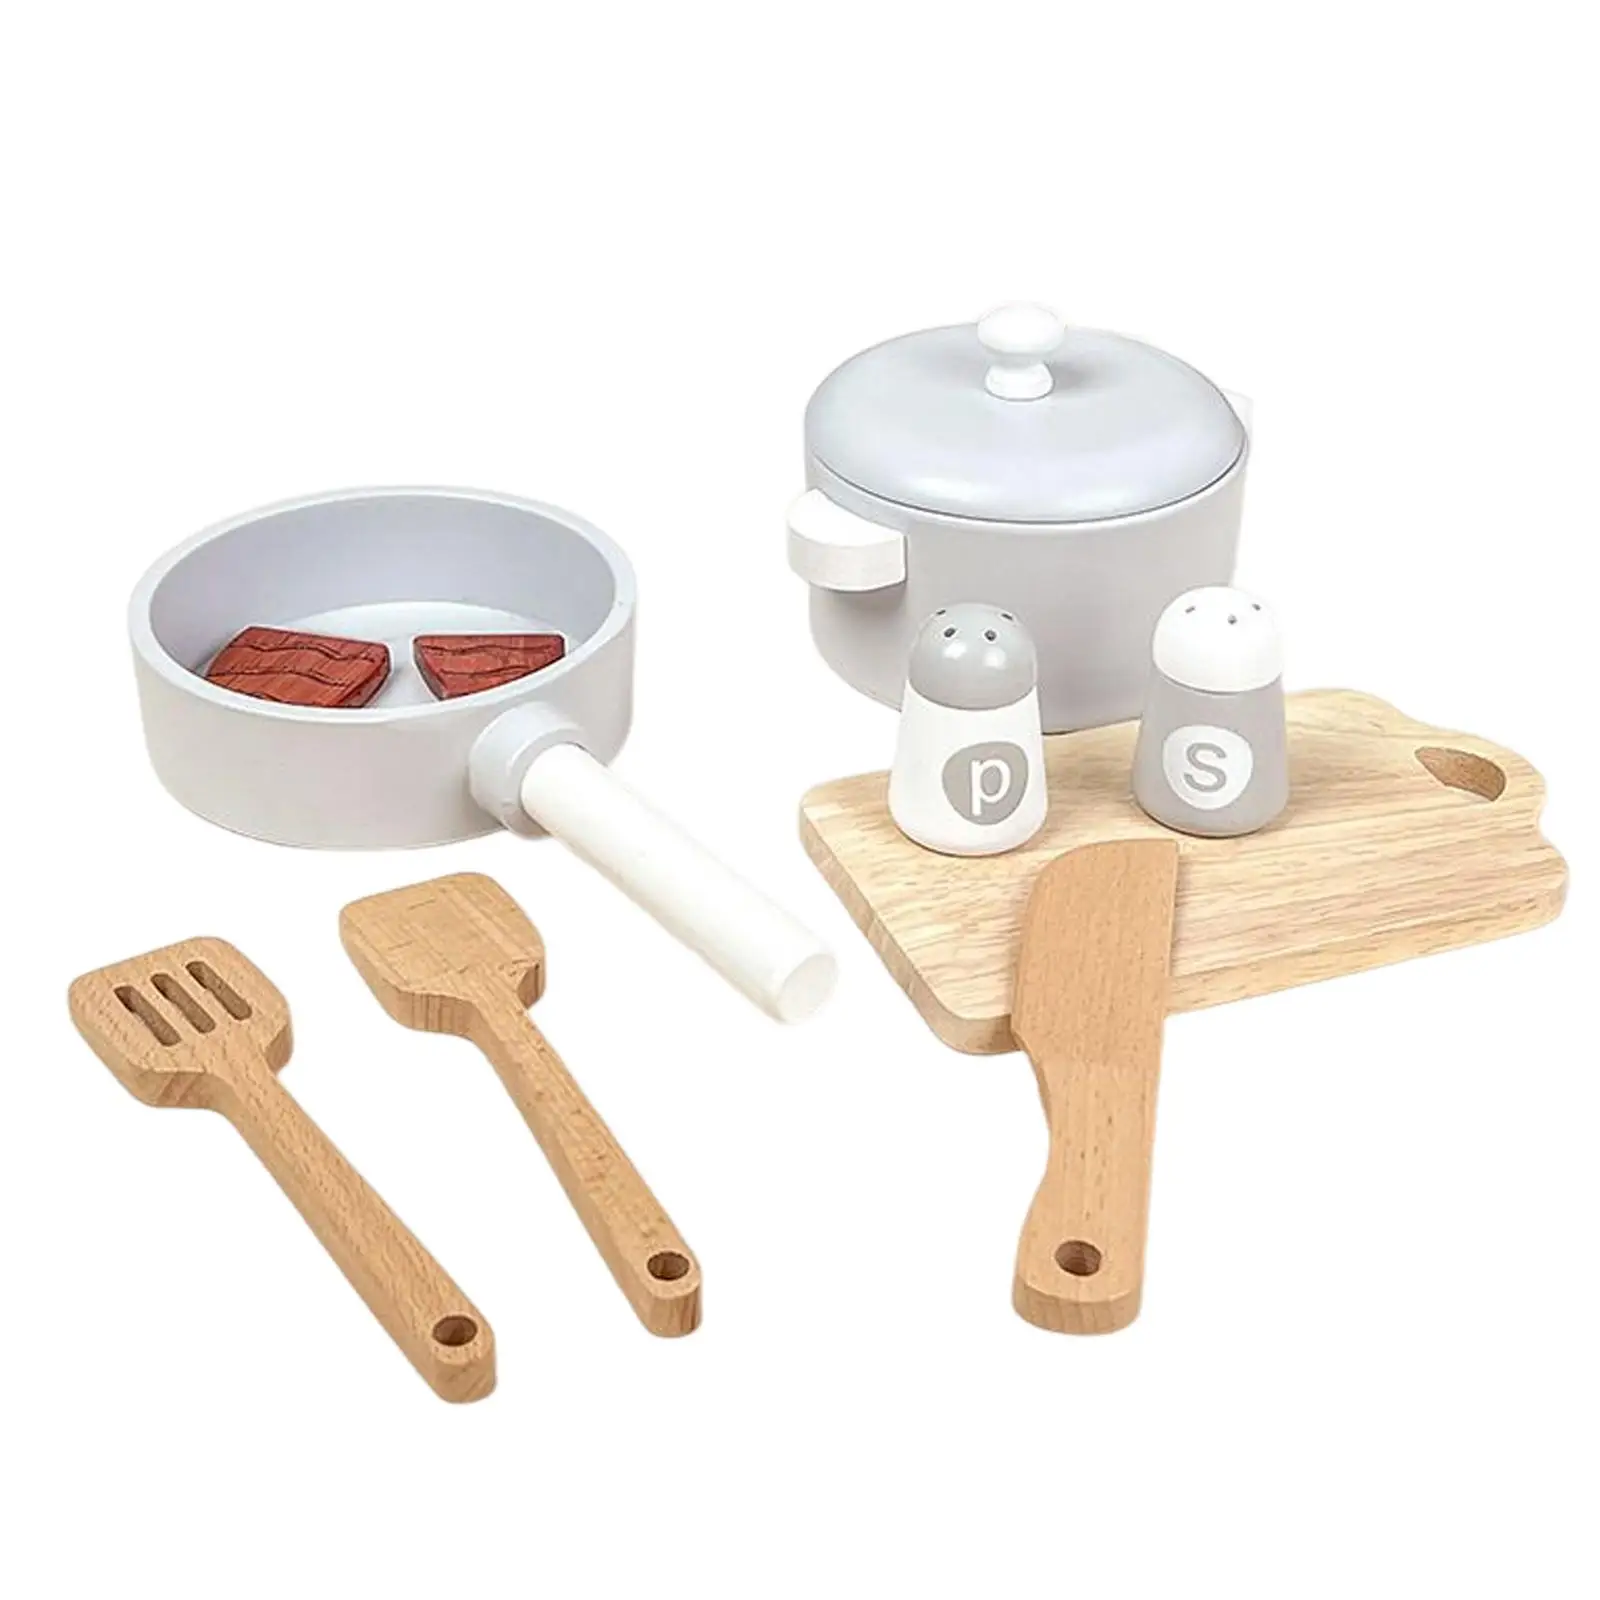 kitchen Set Mini Wooden Play Kitchen Accessories DIY Simulation for Kids